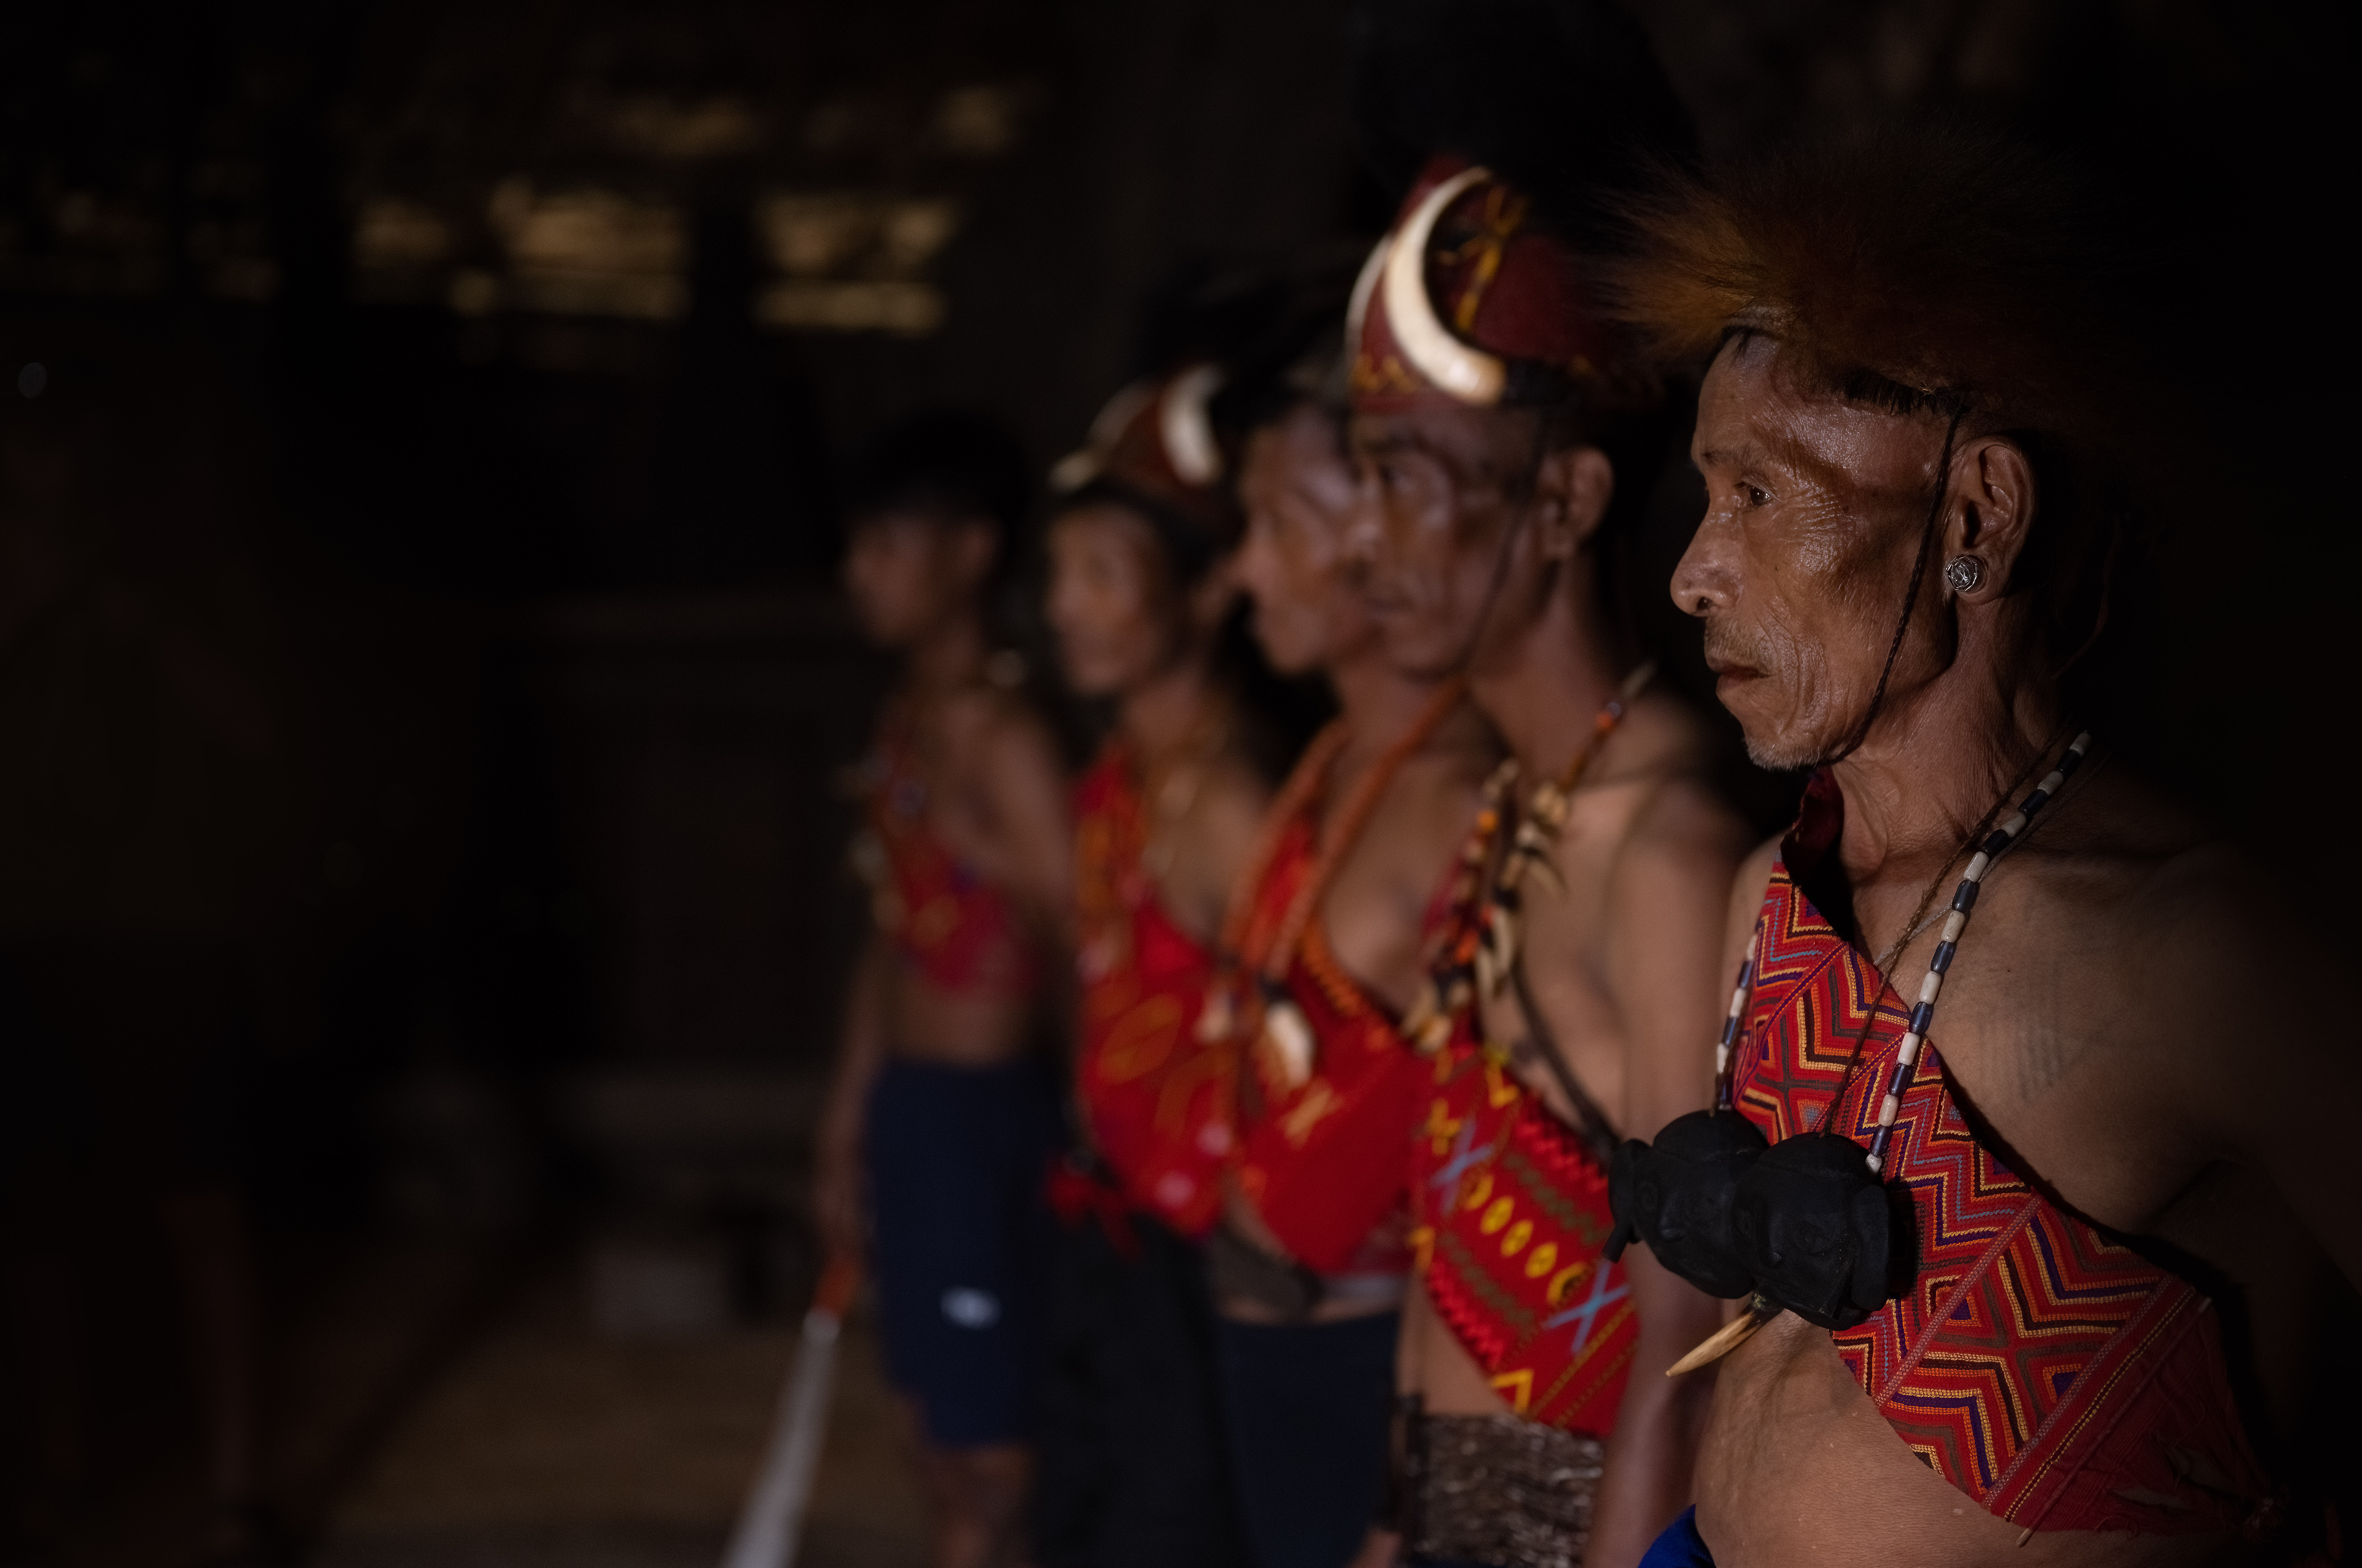 Young men in cultural dress perform ceremonial dances